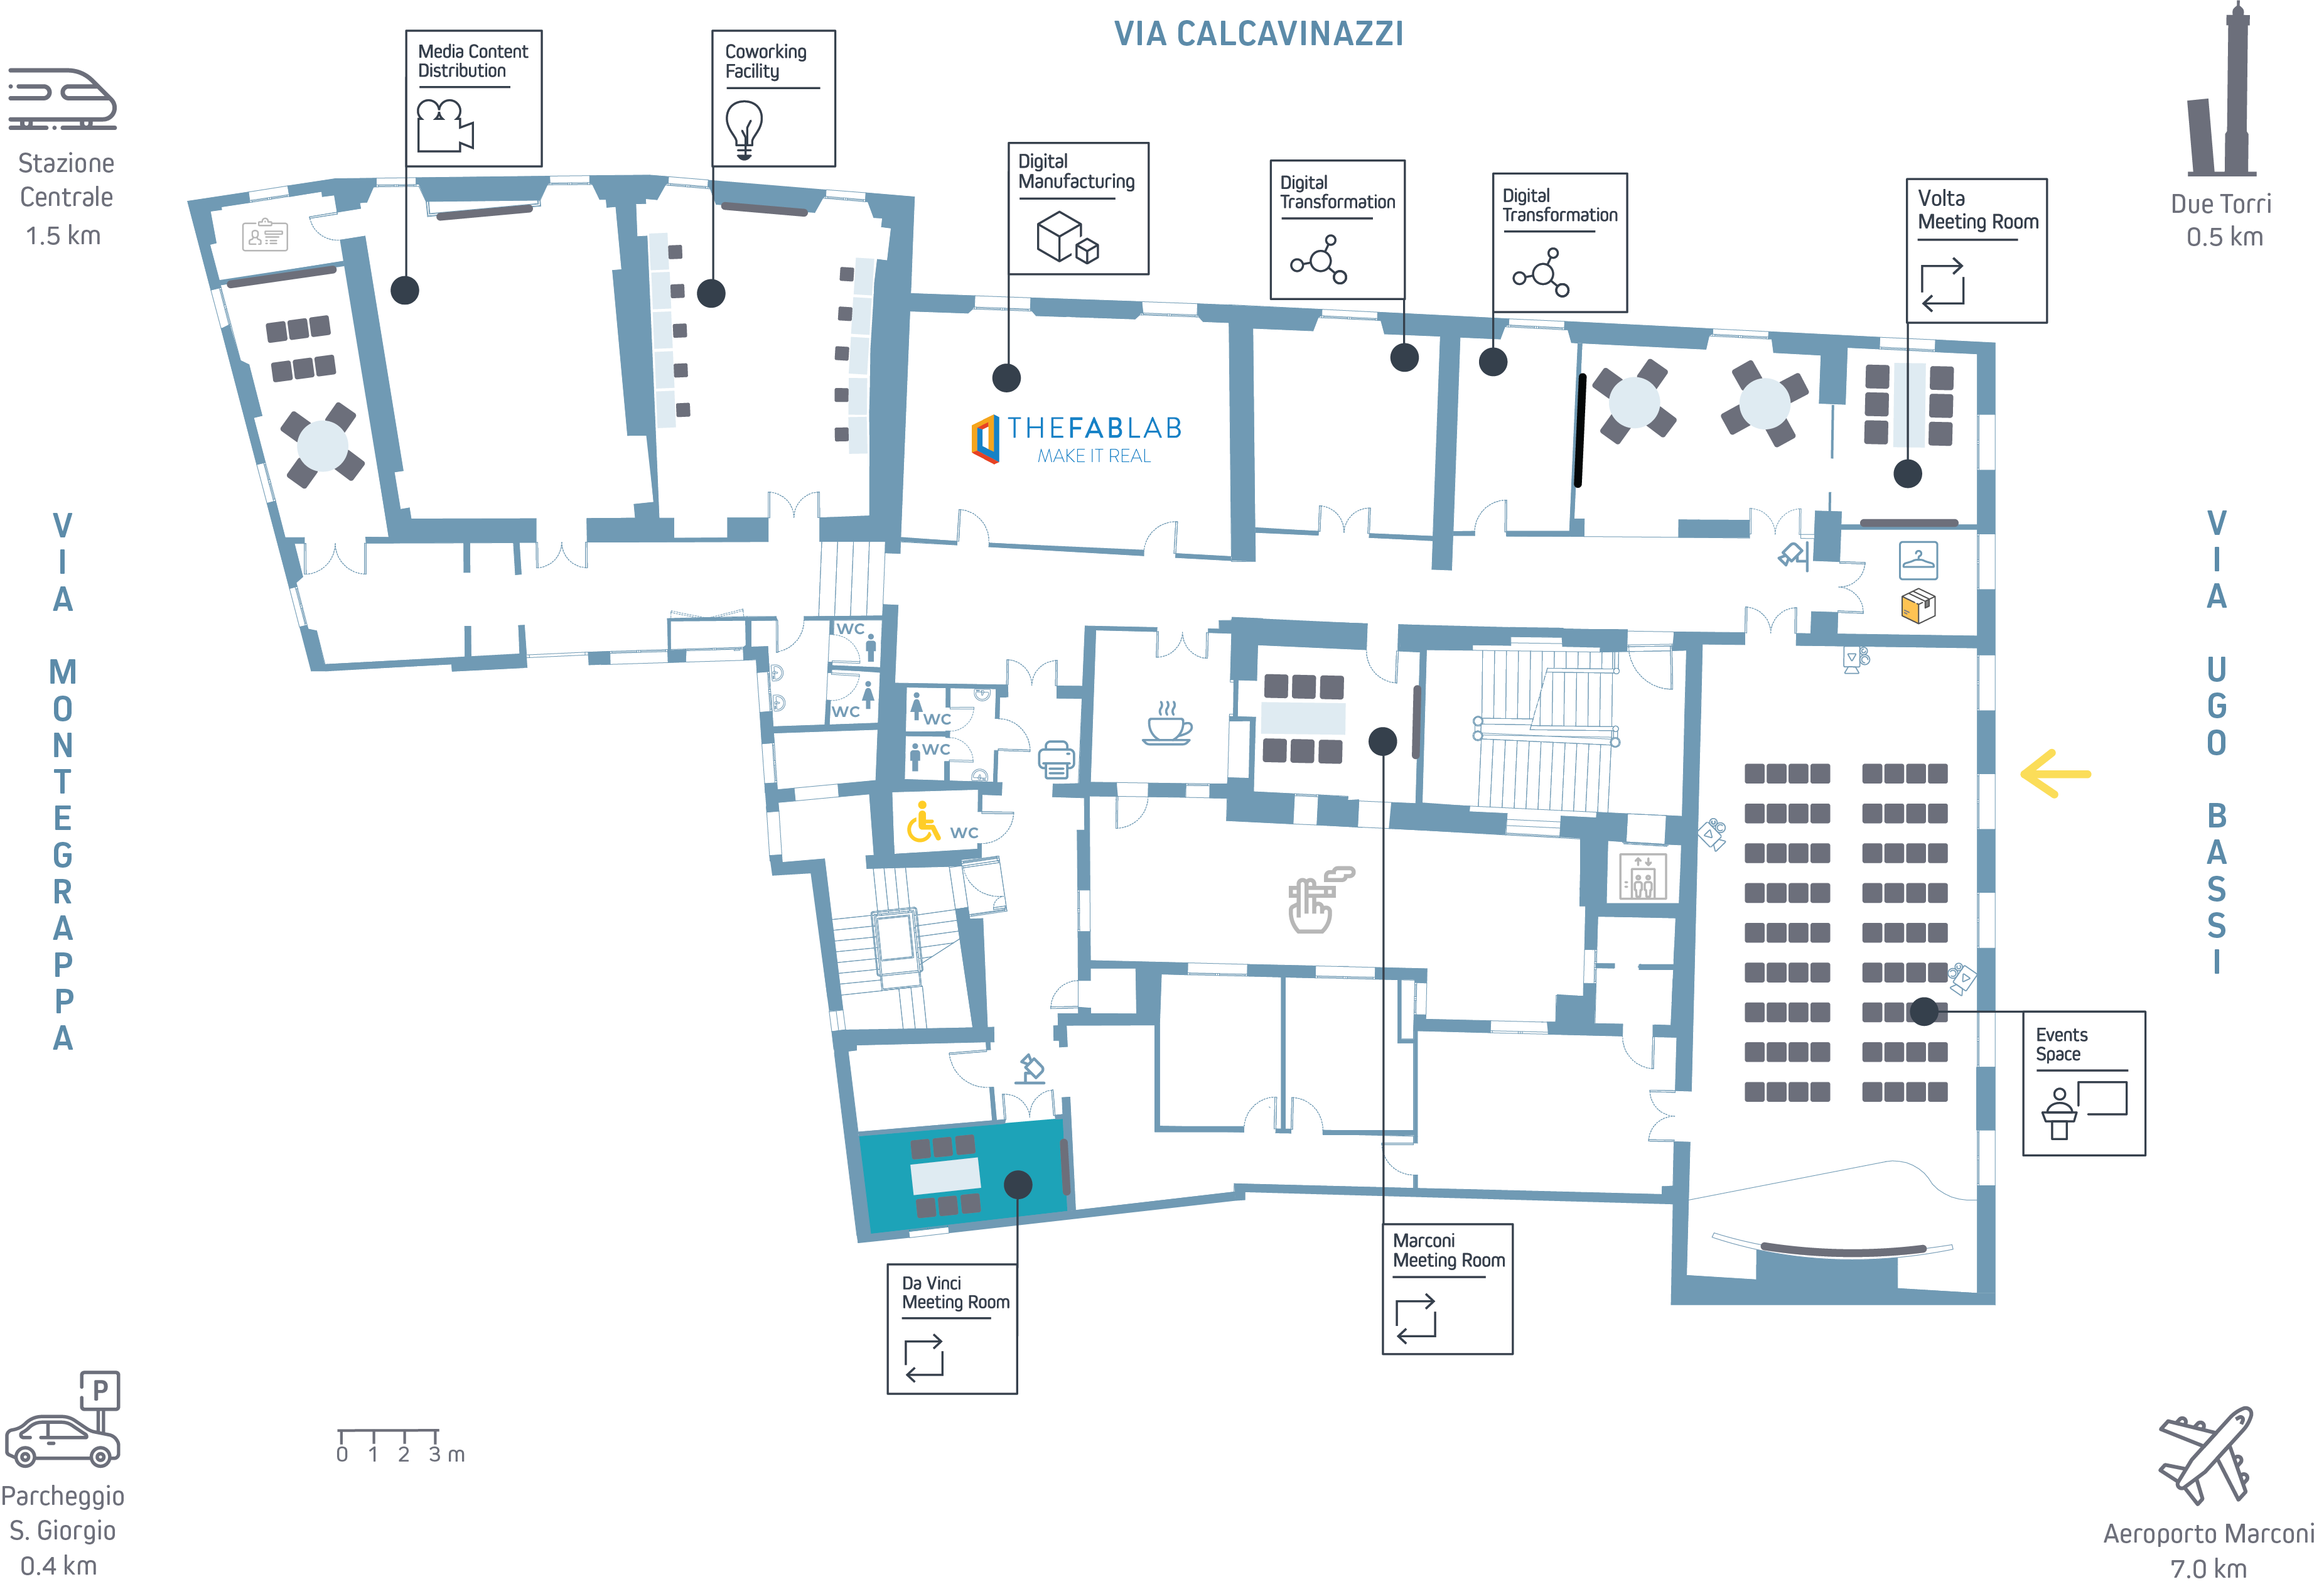 Net-Service-Digital-Hub-Floor-Map-Da-Vinci-Meeting-Room